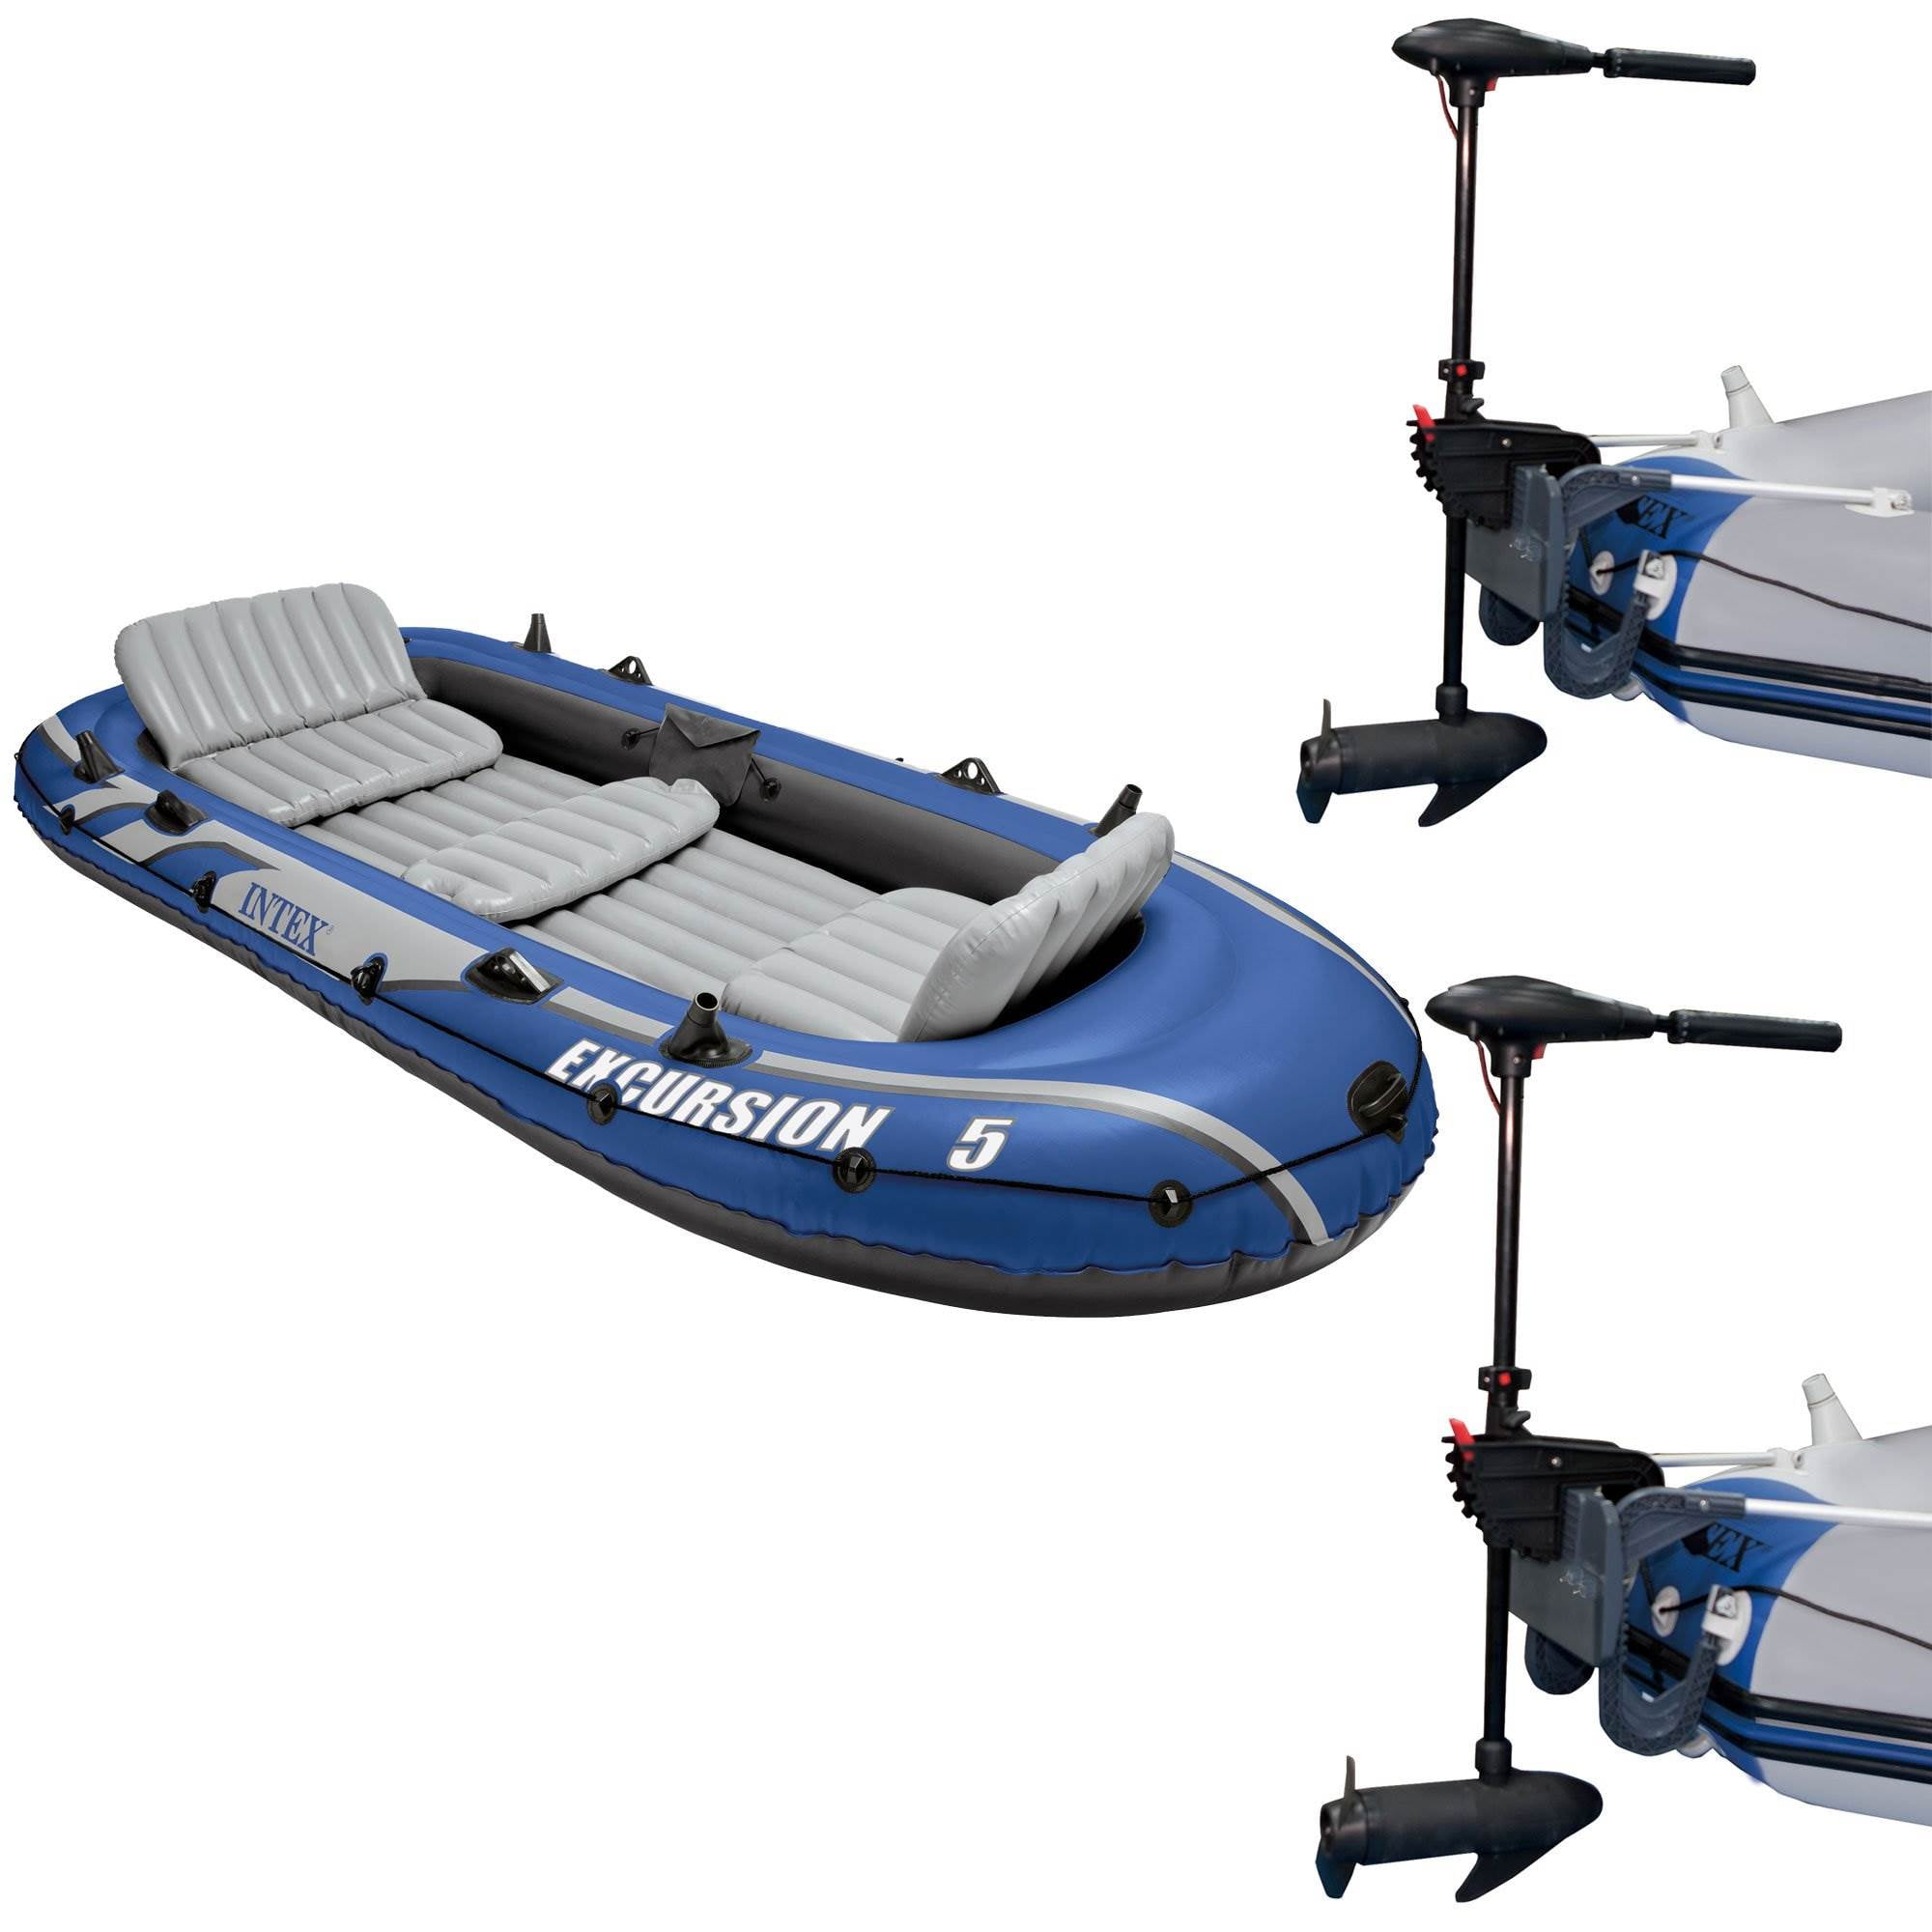 Intex Excursion 5 Inflatable Boat Set 2 Transom Mount 8 Speed Trolling Motors Walmart Com Walmart Com